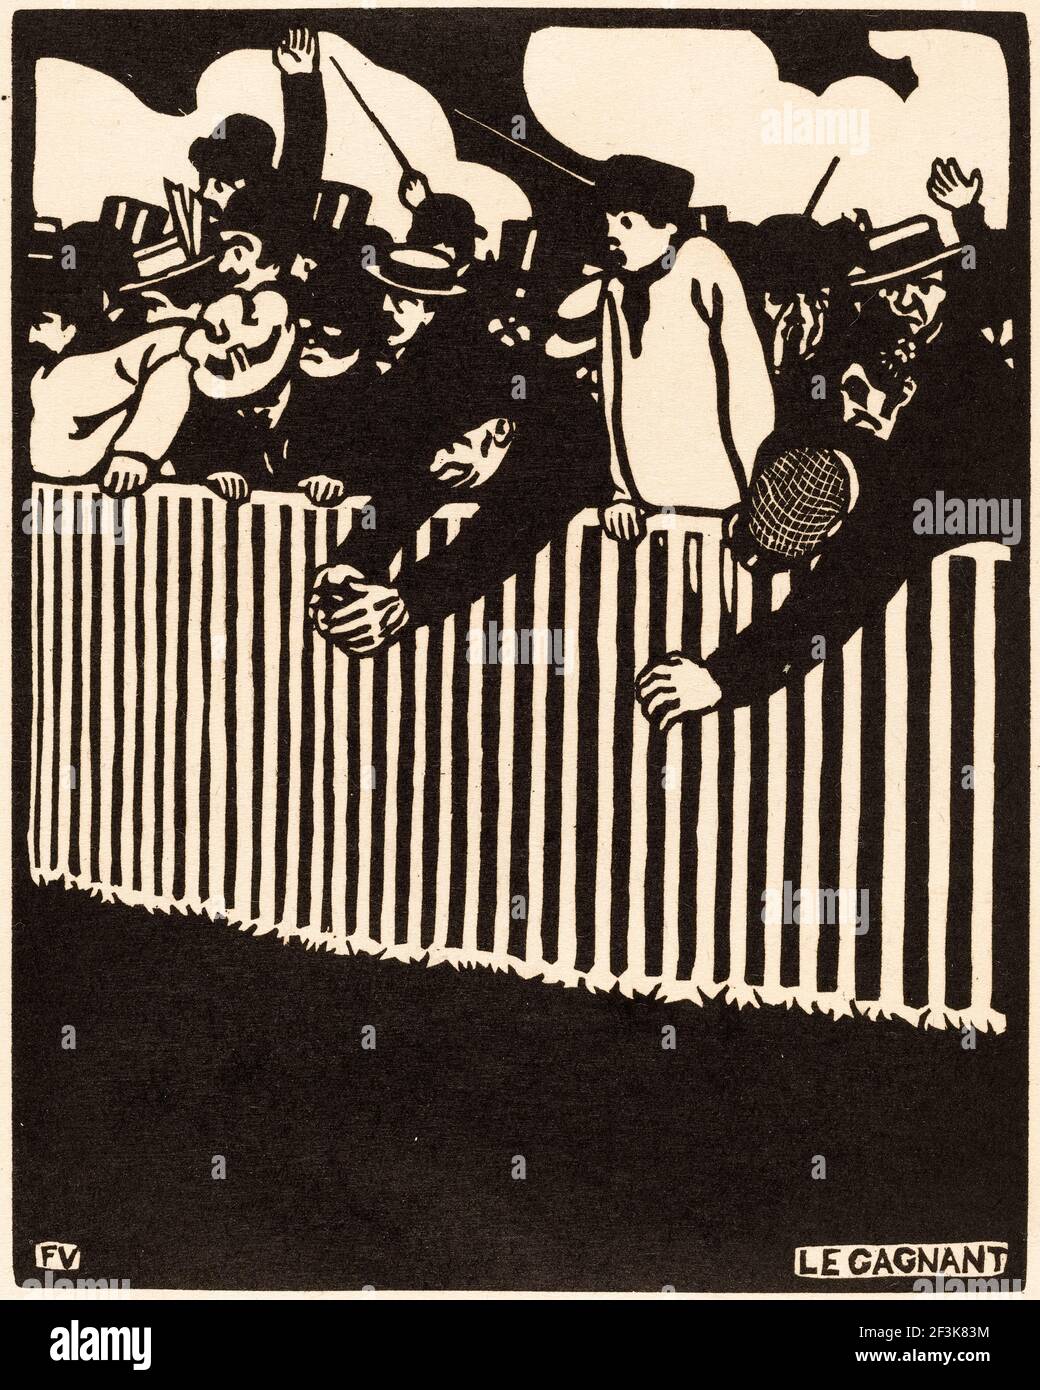 Félix Vallotton, Le Gagnant (The Winner), woodcut print, 1898 Stock Photo